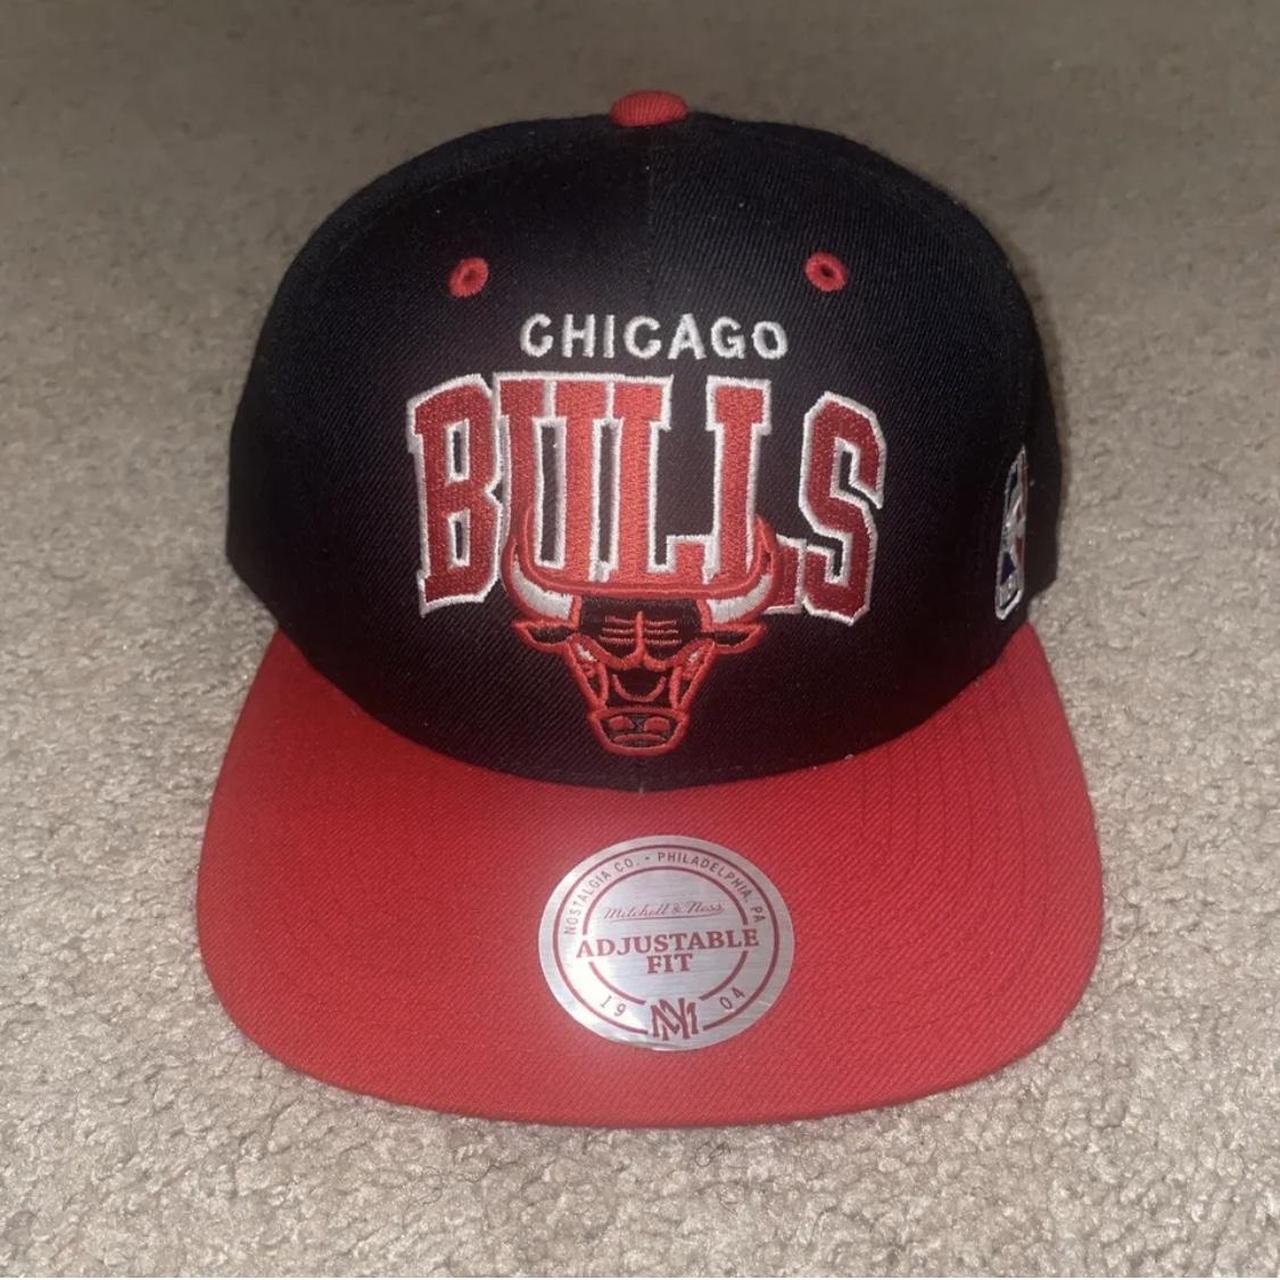 Mitchell & Ness NBA Hardwood Classics Chicago Bulls Snapback Hat